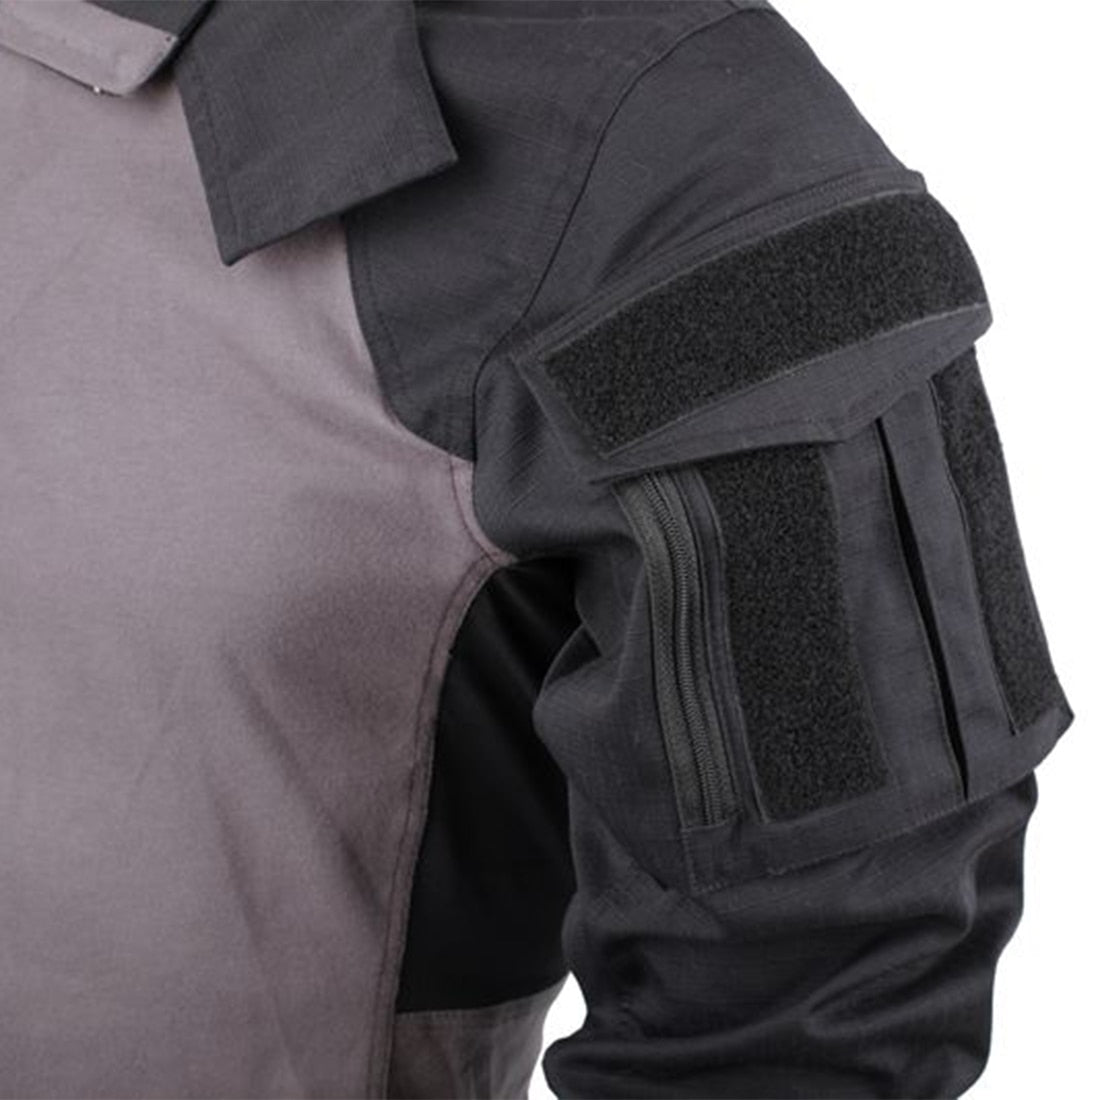 Black and Grey Combat Shirt